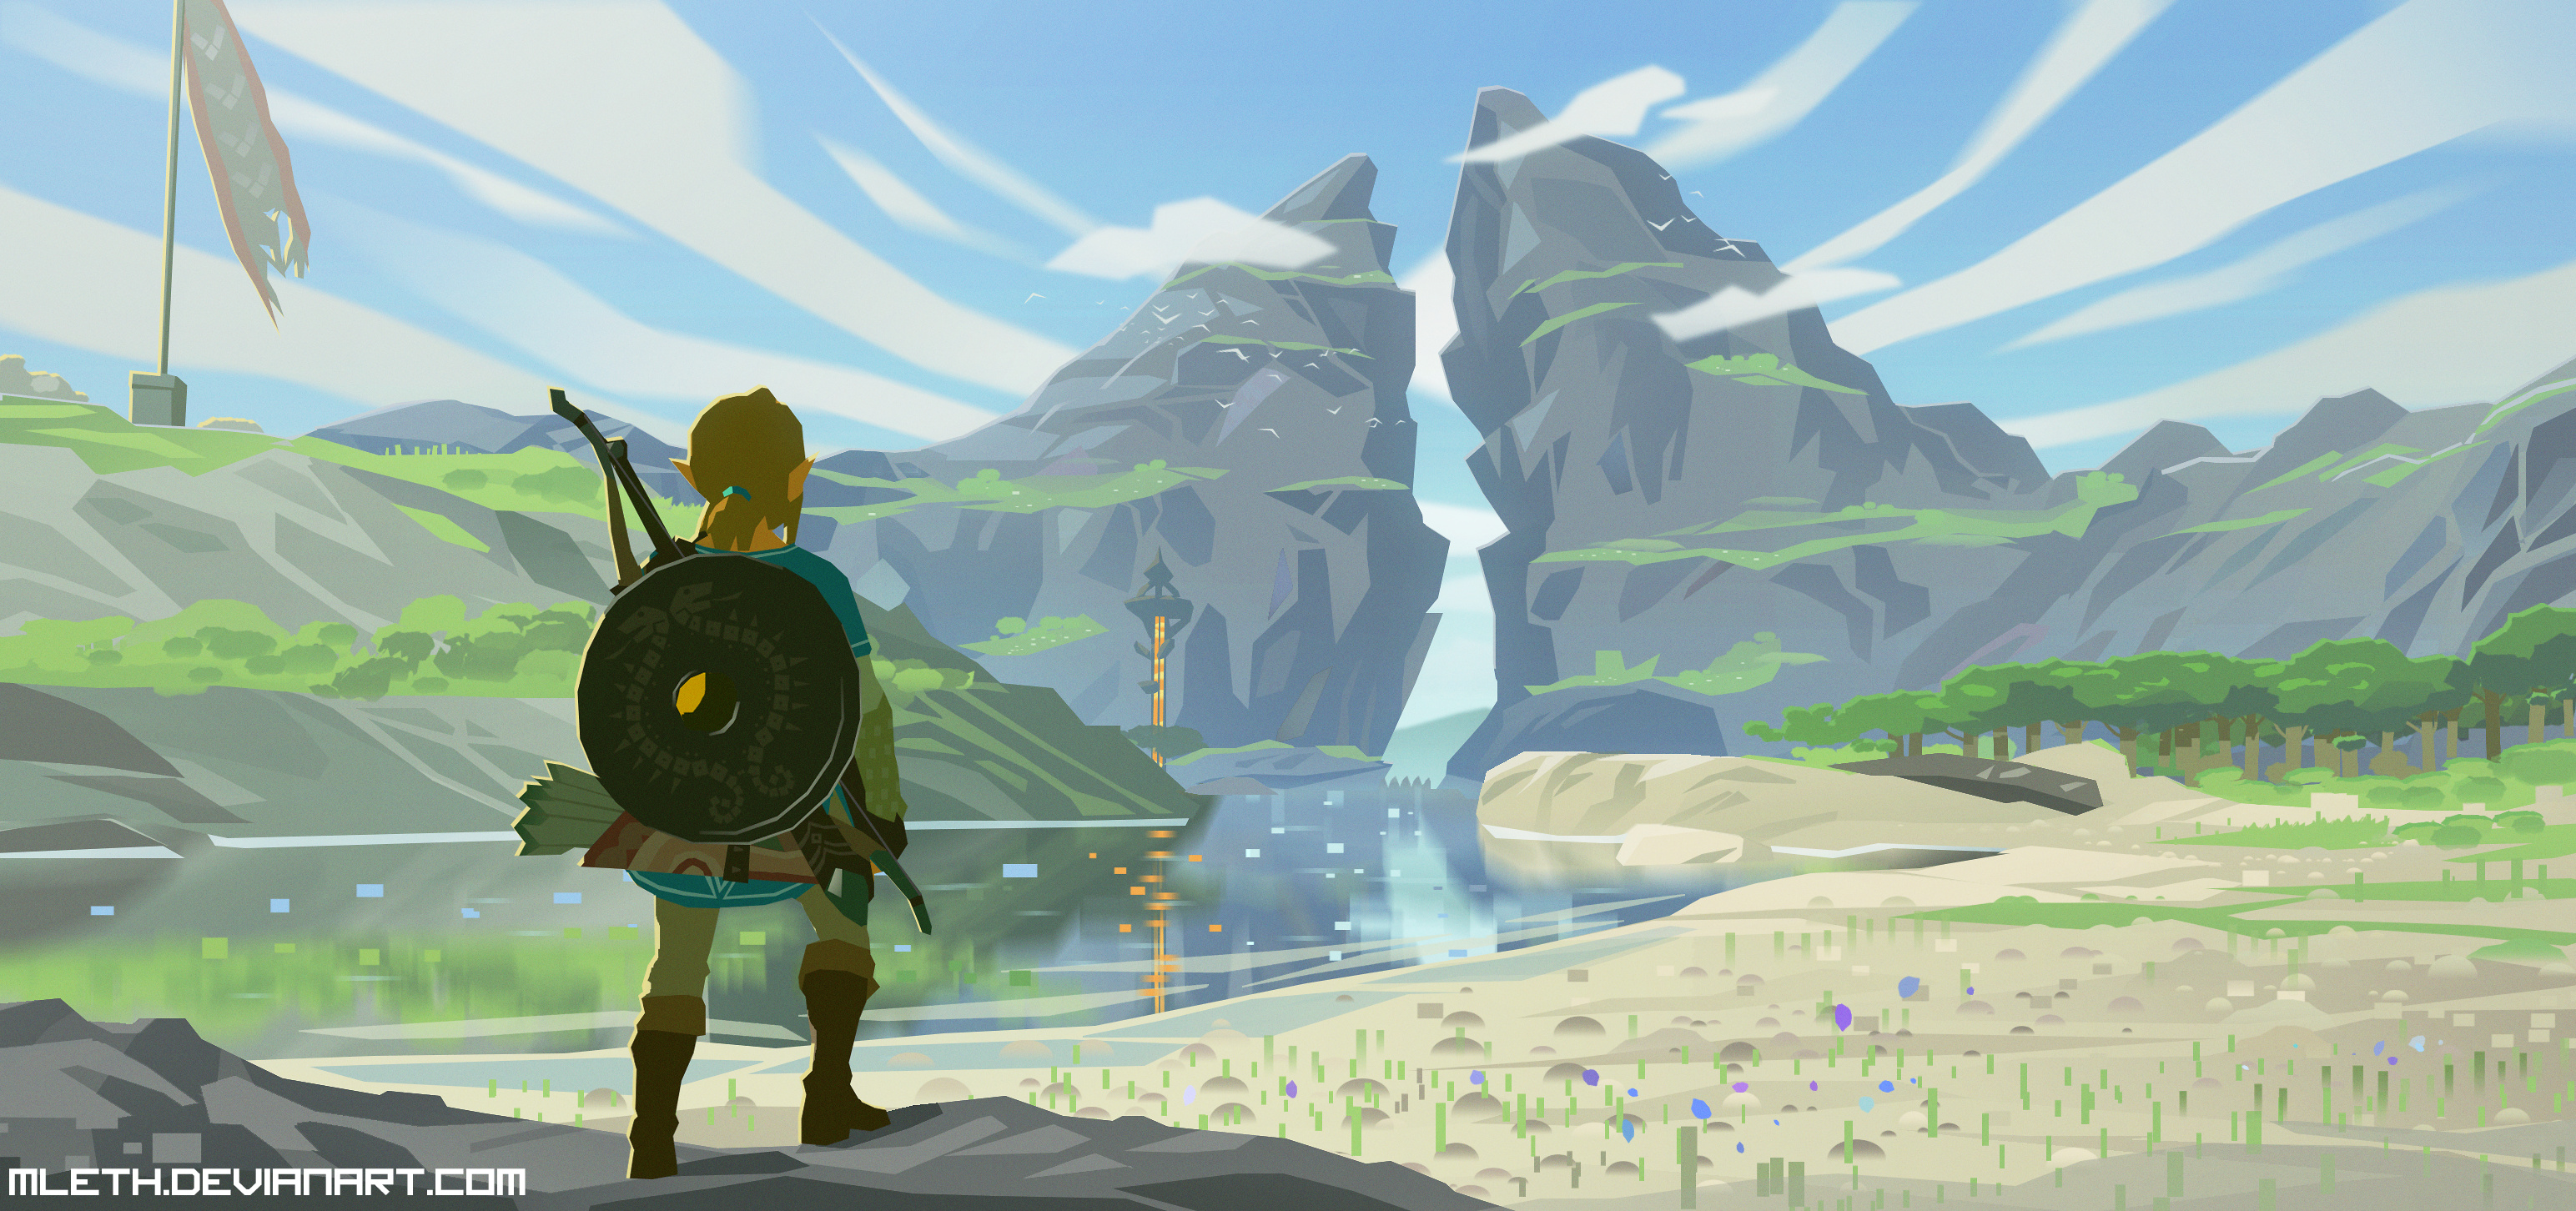 Link, Legendary journey, Epic battles, Captivating fantasy world, 3090x1460 Dual Screen Desktop